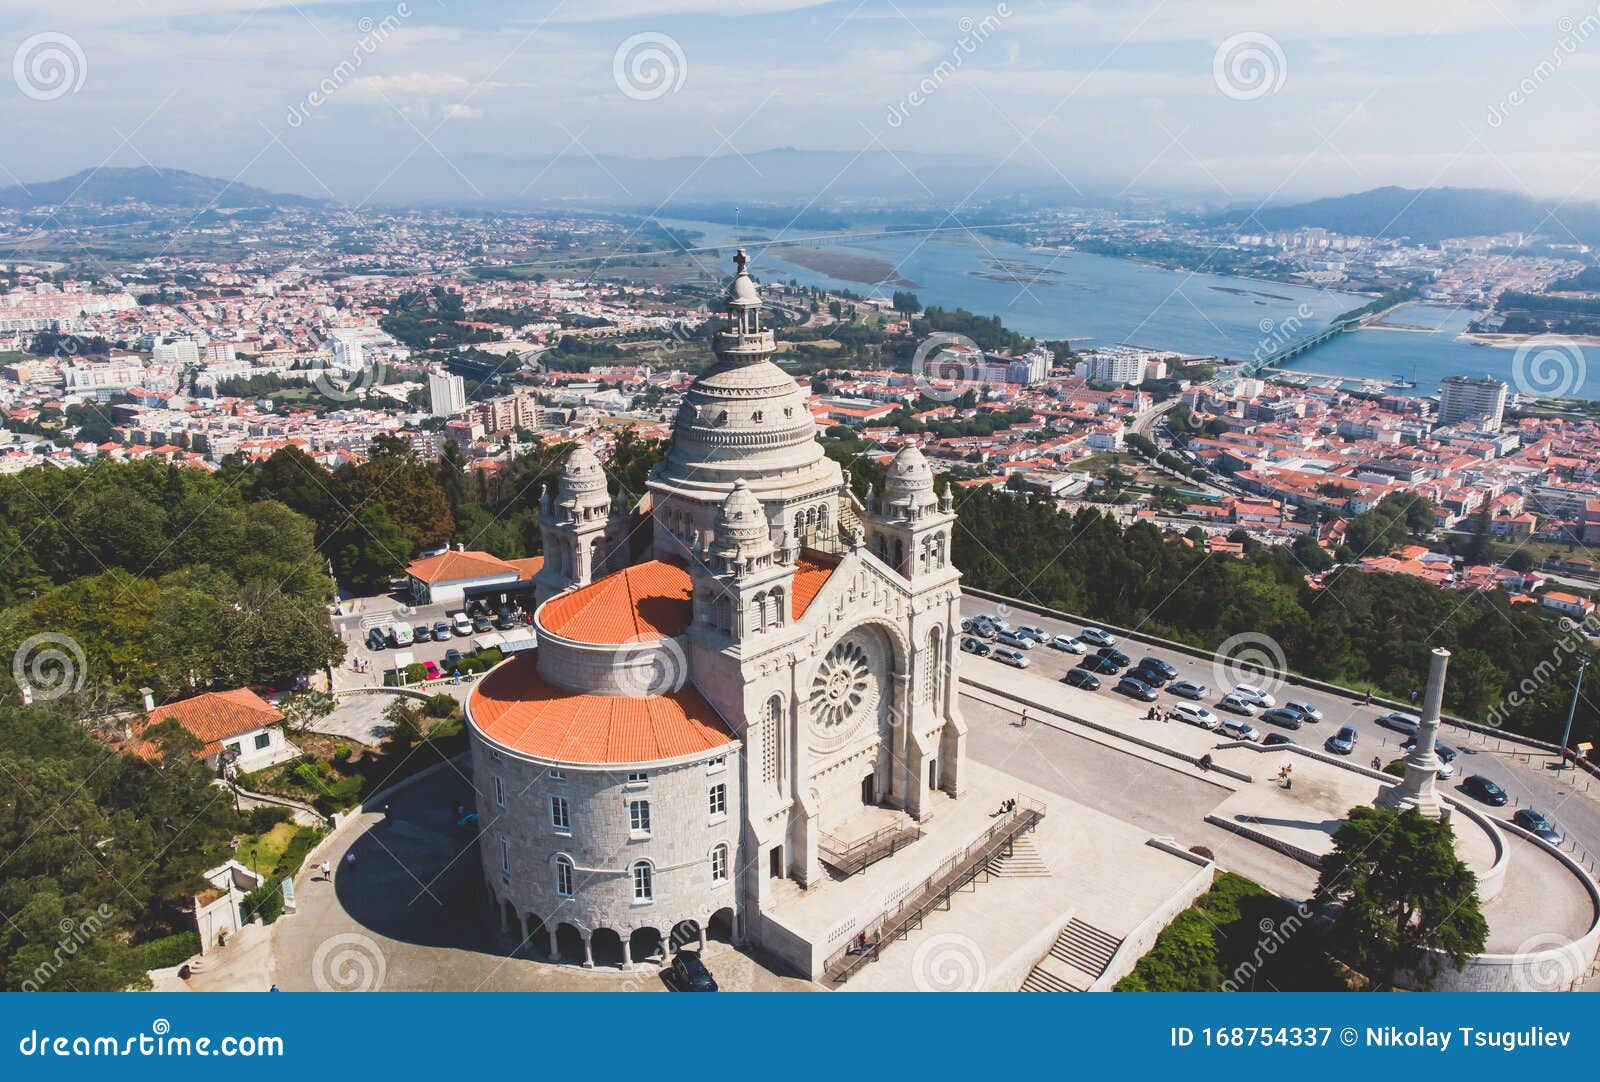 aerial view of viana do castelo, norte region, portugal, with basilica santa luzia church, shot from drone